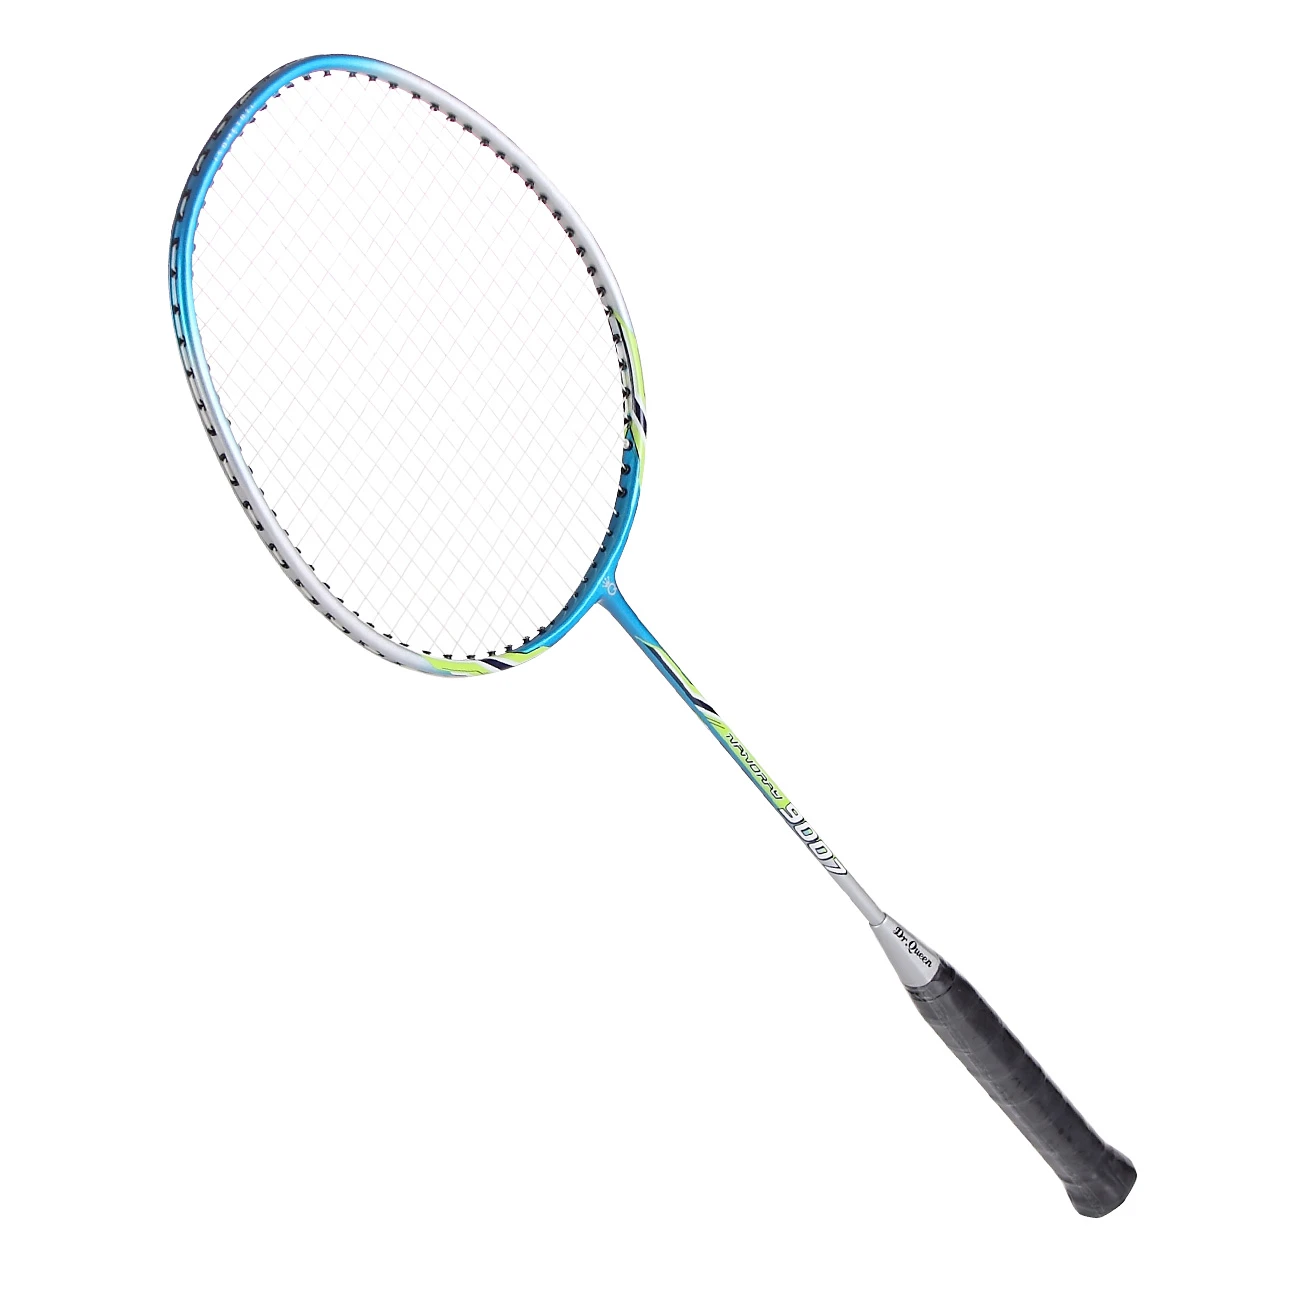 DECOQ Professional Badminton Racquets Set Super Lightweight Badminton Racket Including Carrying Bag